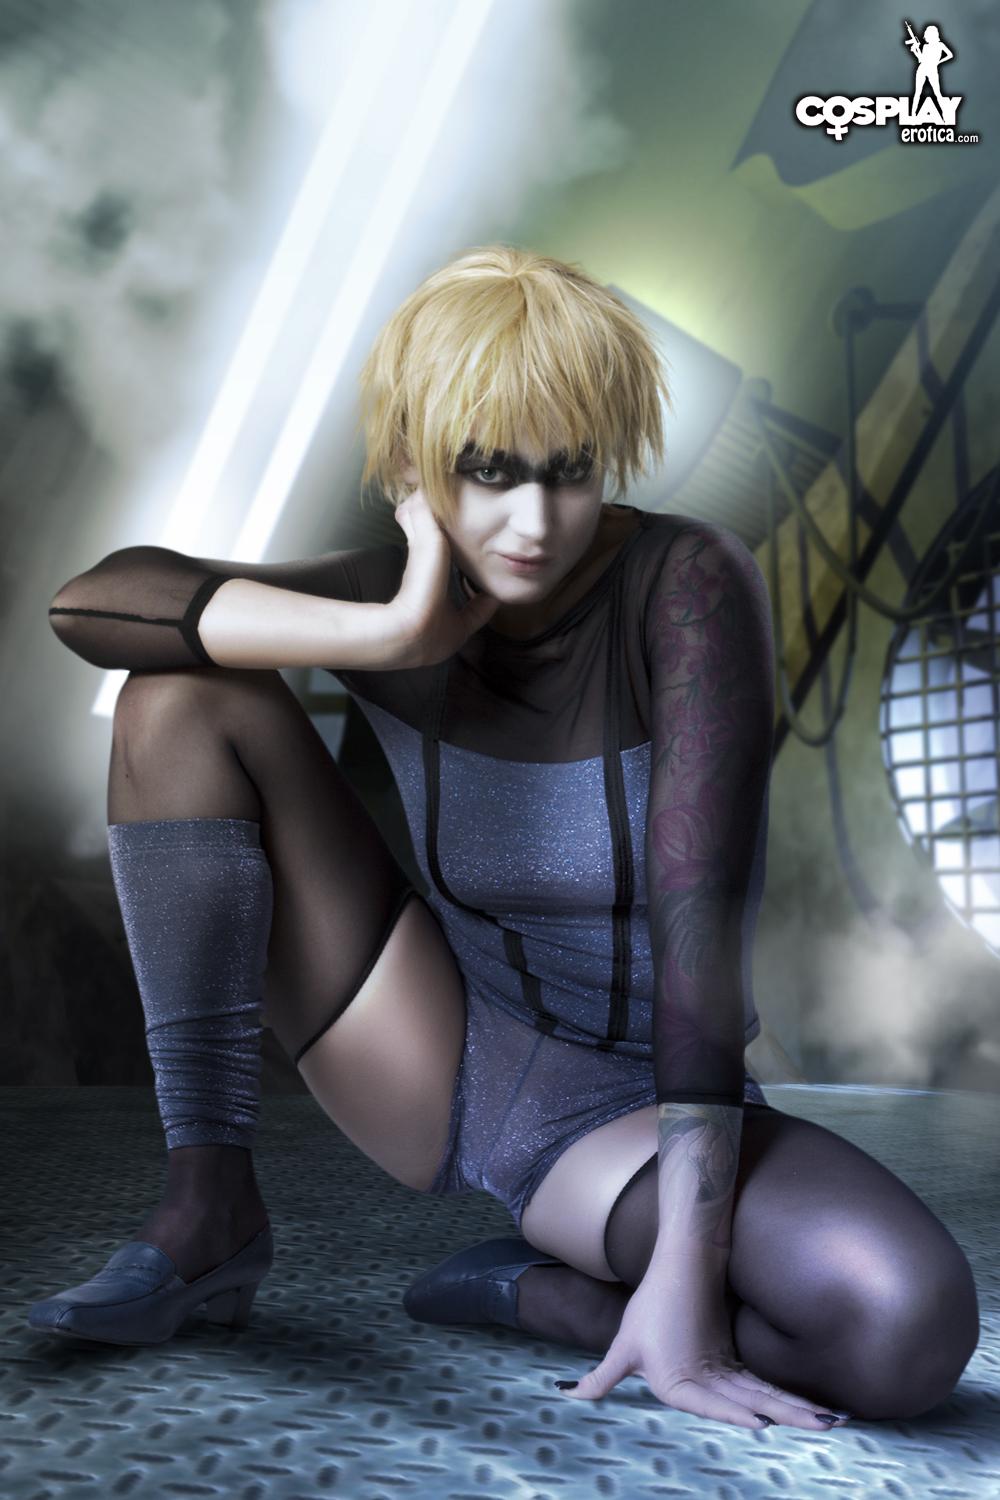 La cosplayeuse Kayla se déguise en Pris de Blade Runner.
 #58176119